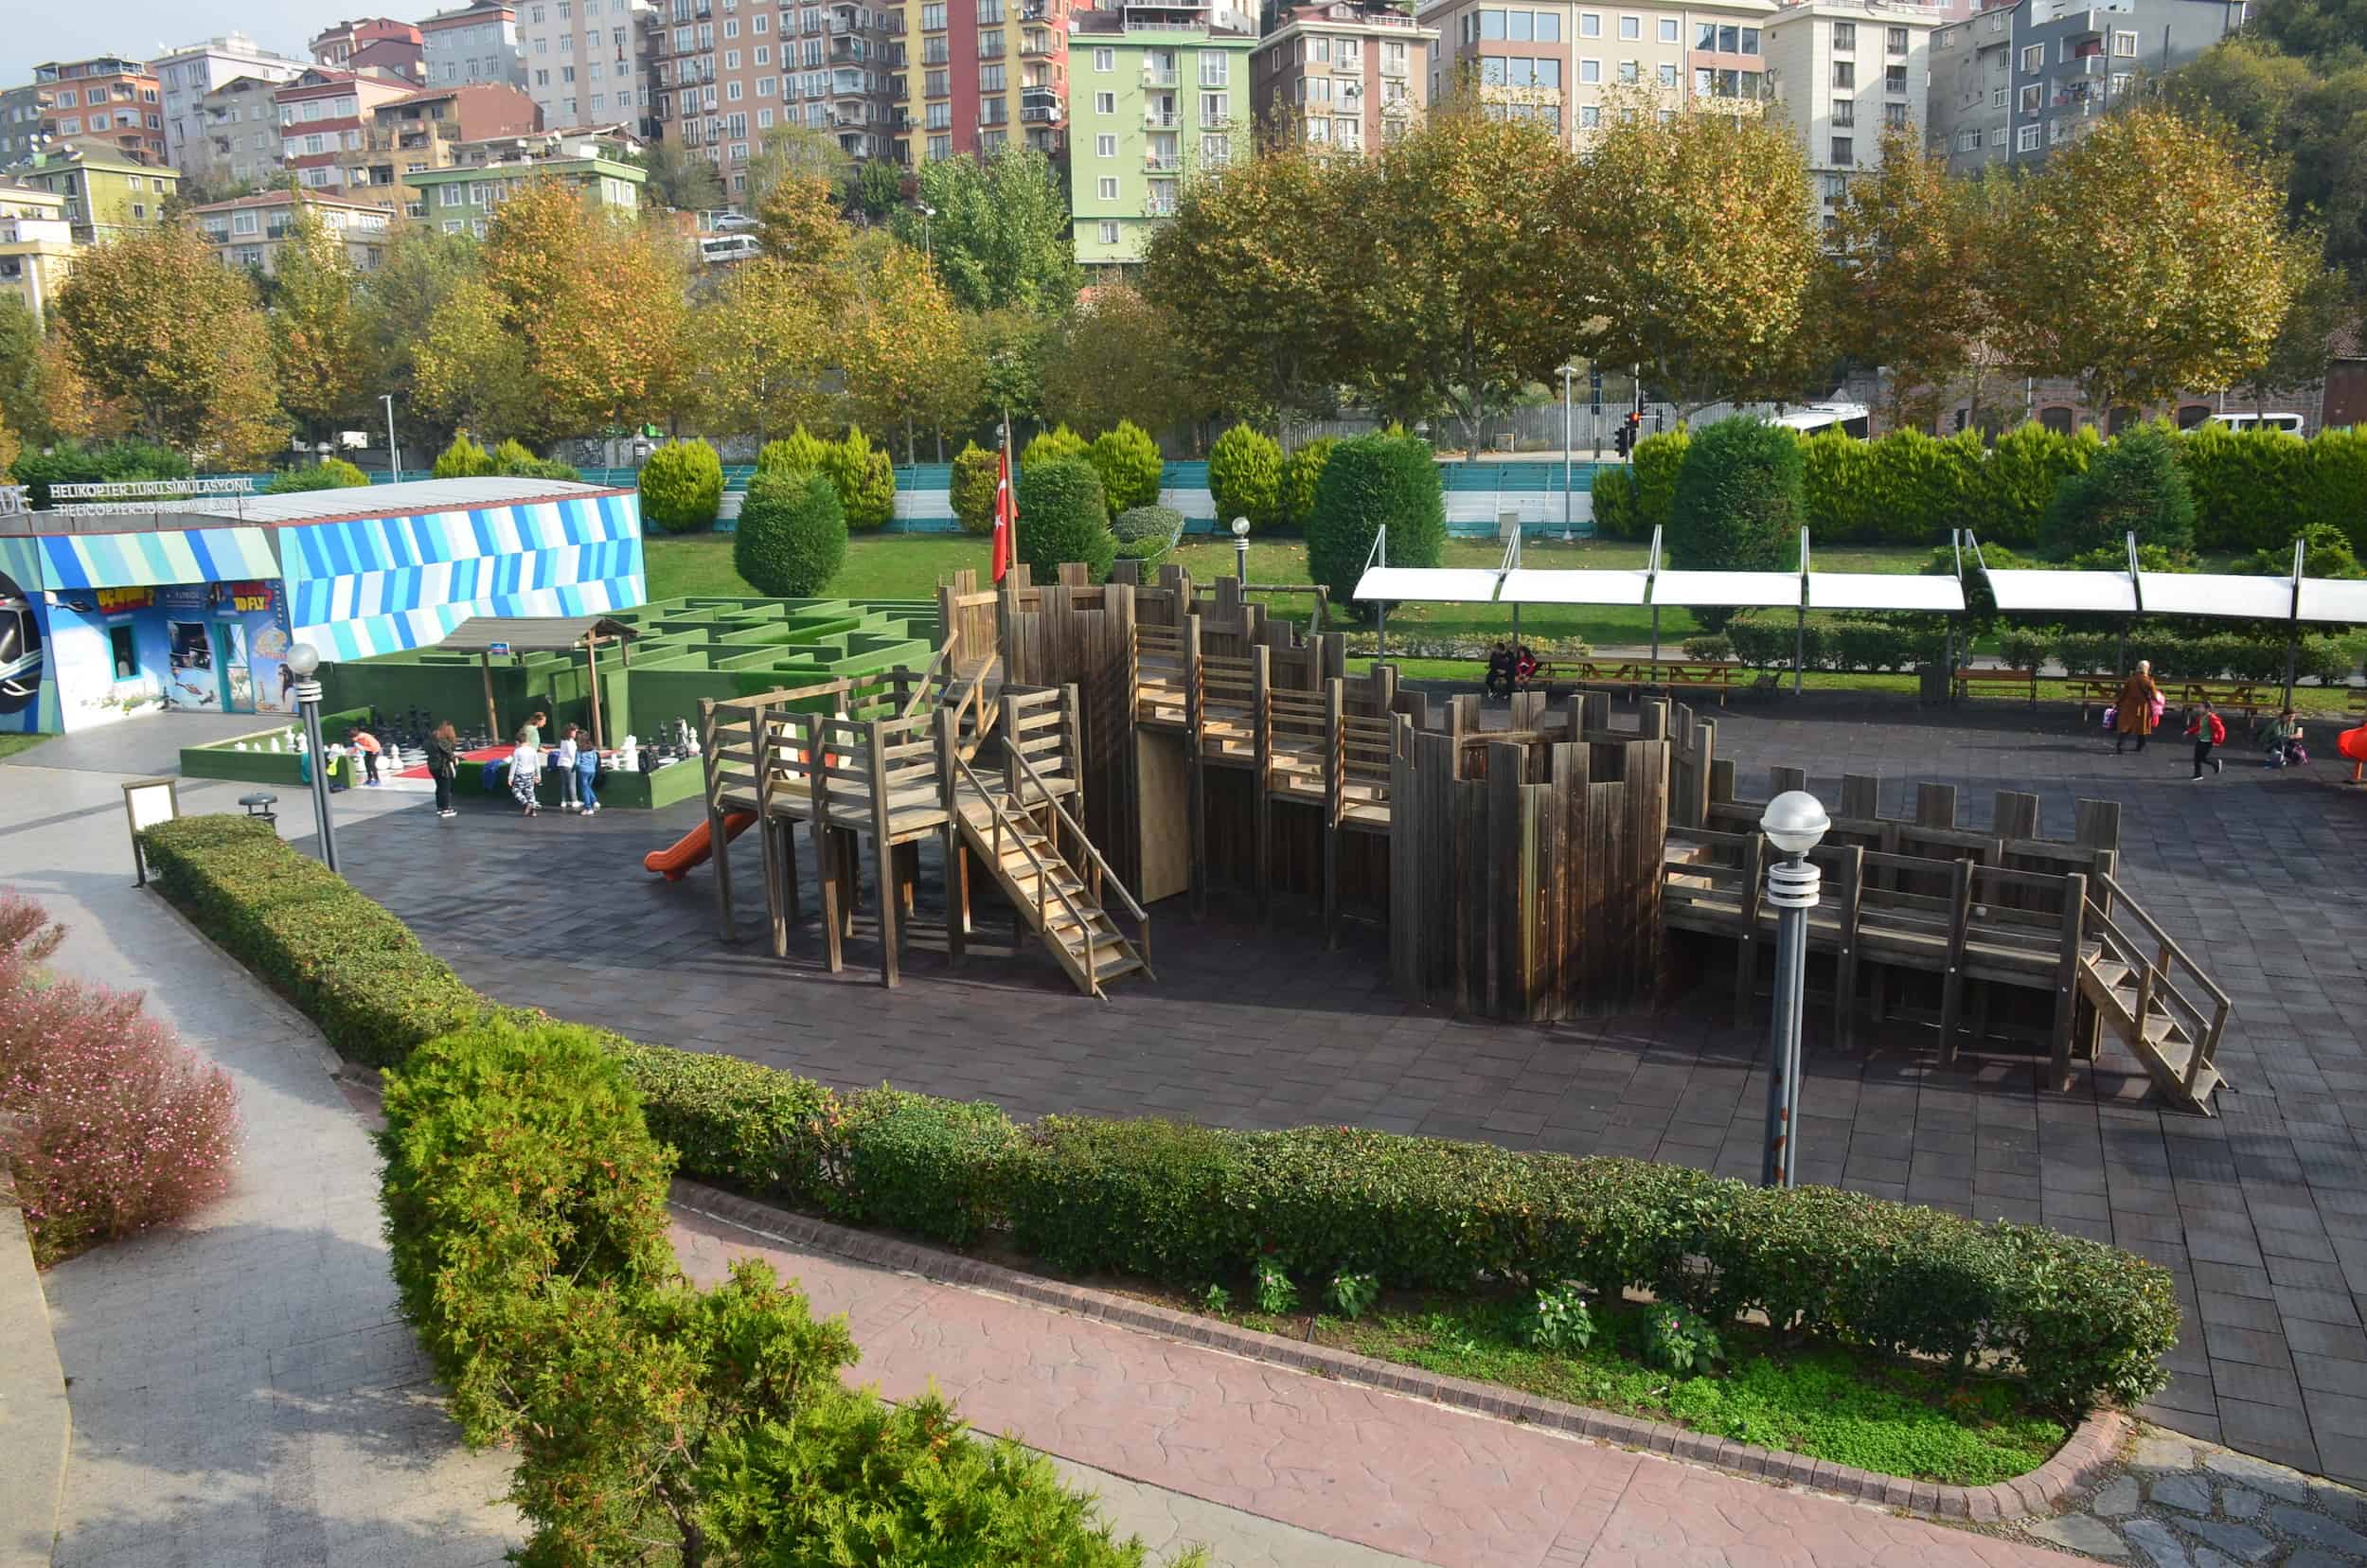 Playground at Miniatürk in Istanbul, Turkey